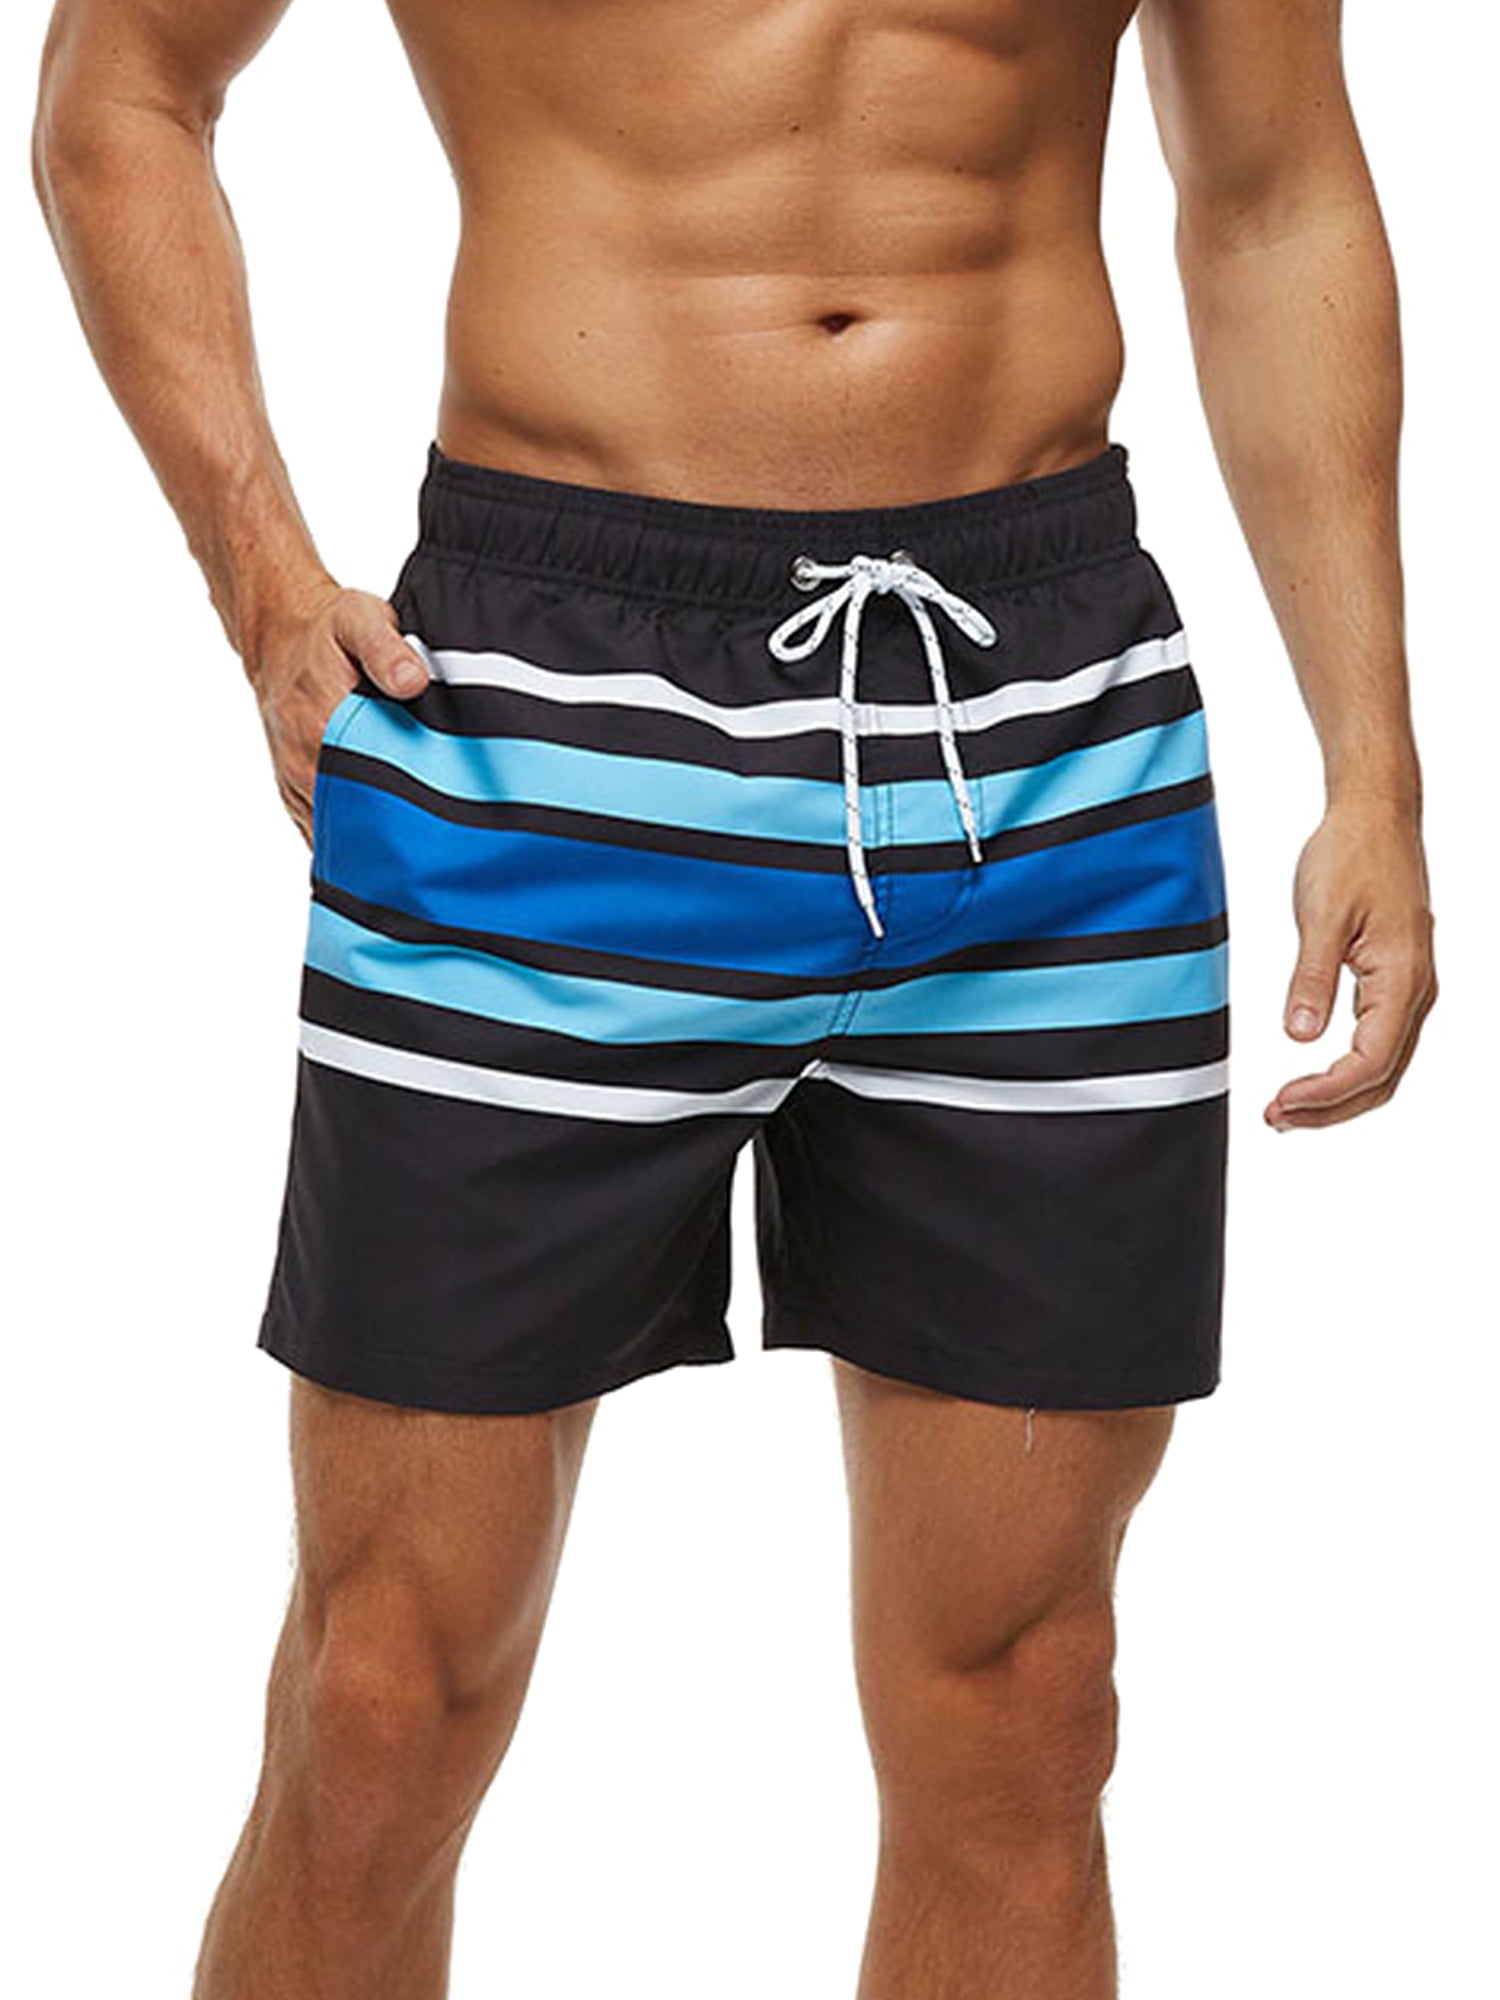 APTRO Mens Shorts Swim Trunks Casual Surf Beach Shorts Quick Dry Board Shorts 01 